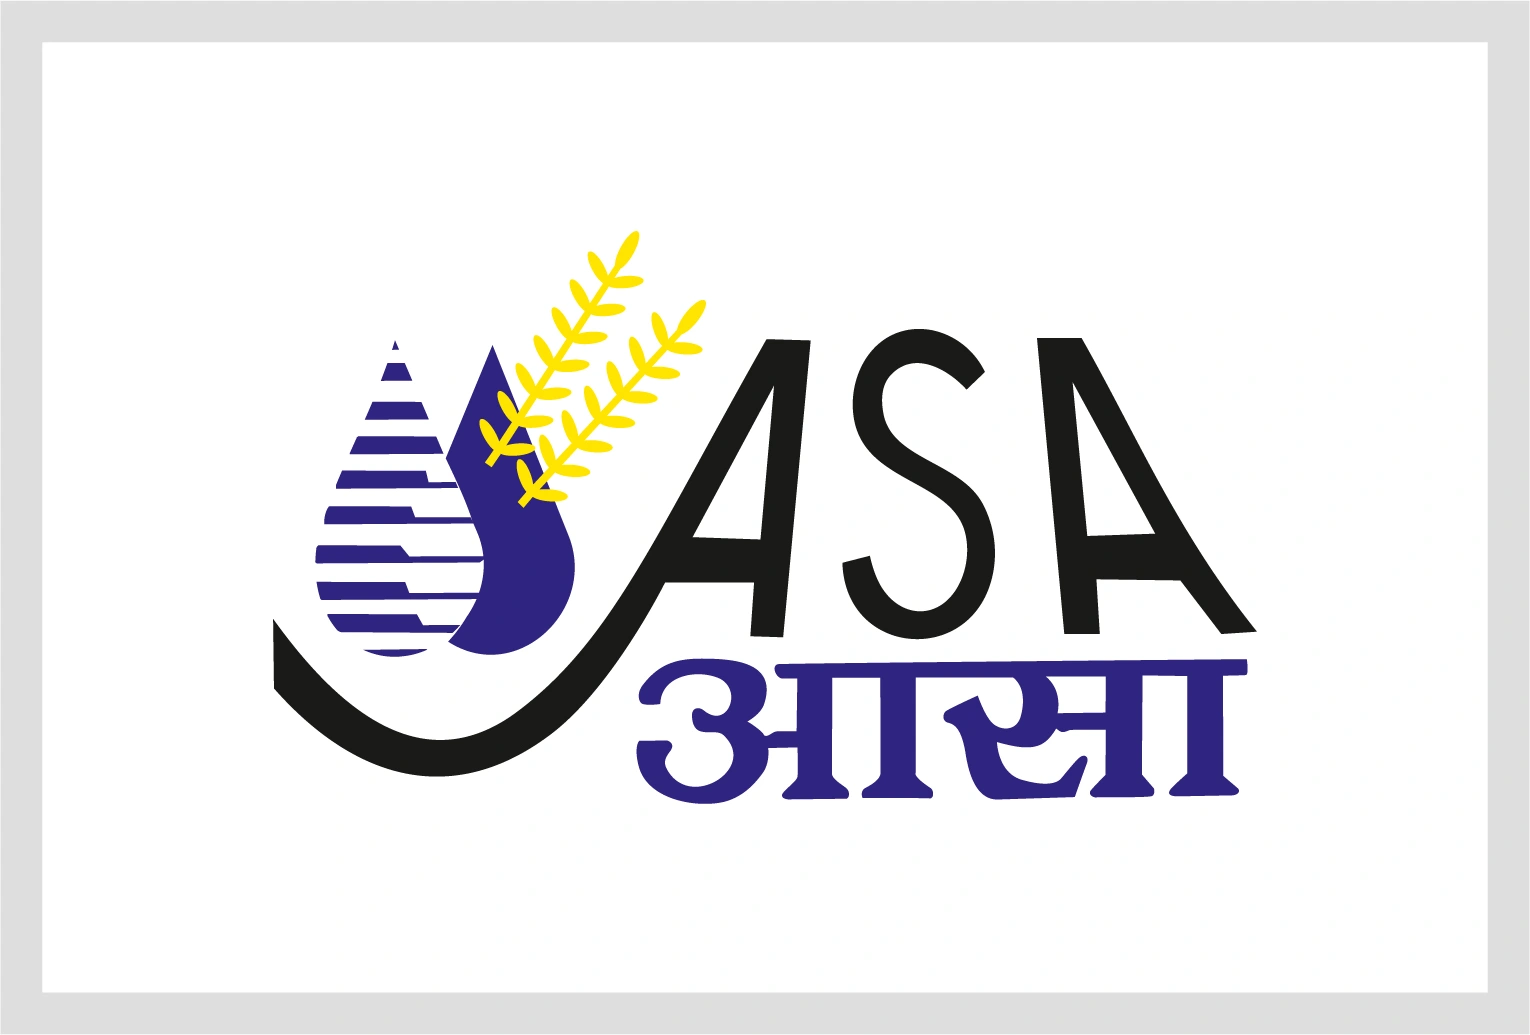 ASA Logo